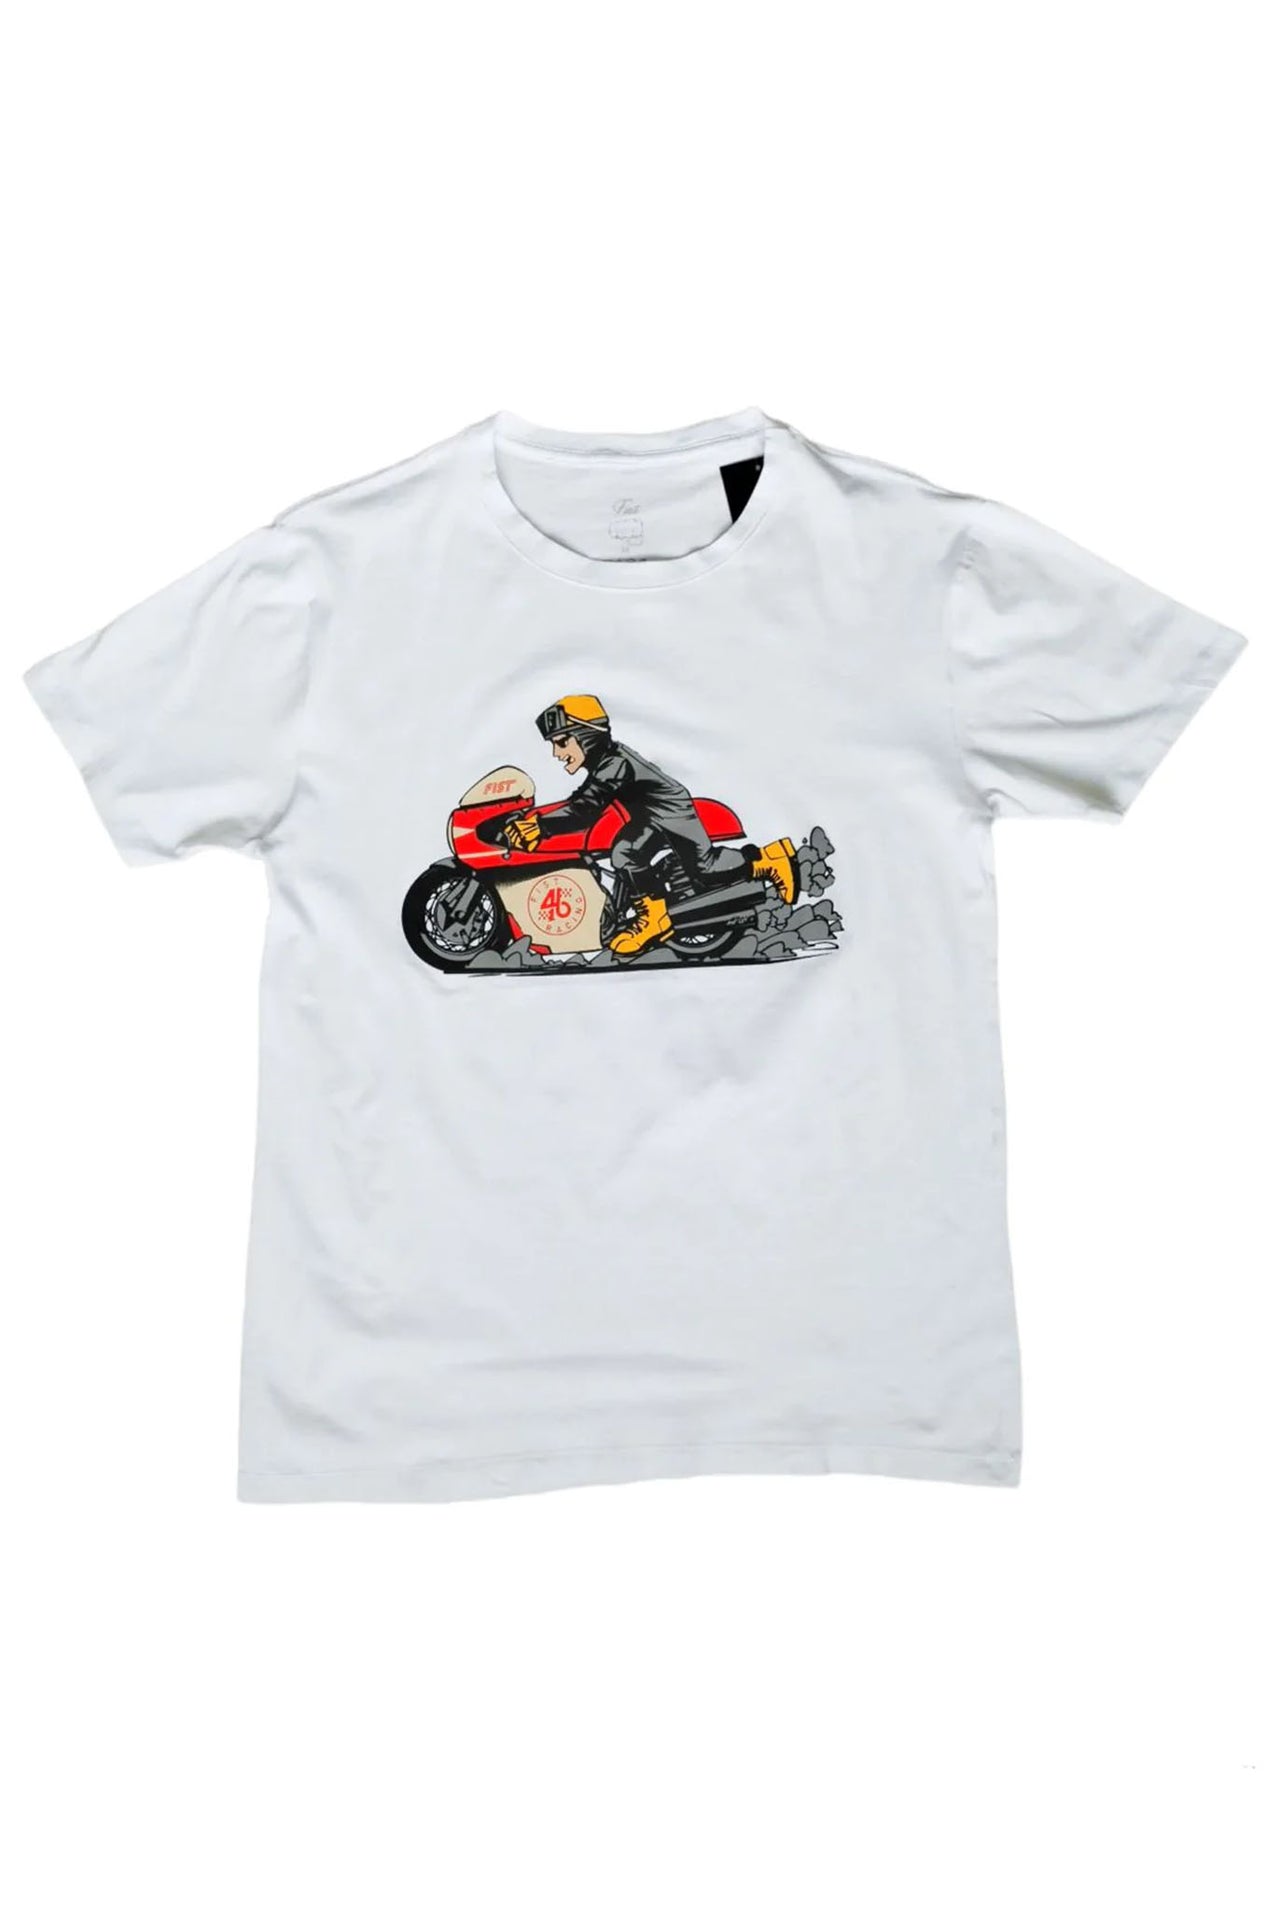 Camiseta Cafe Racer